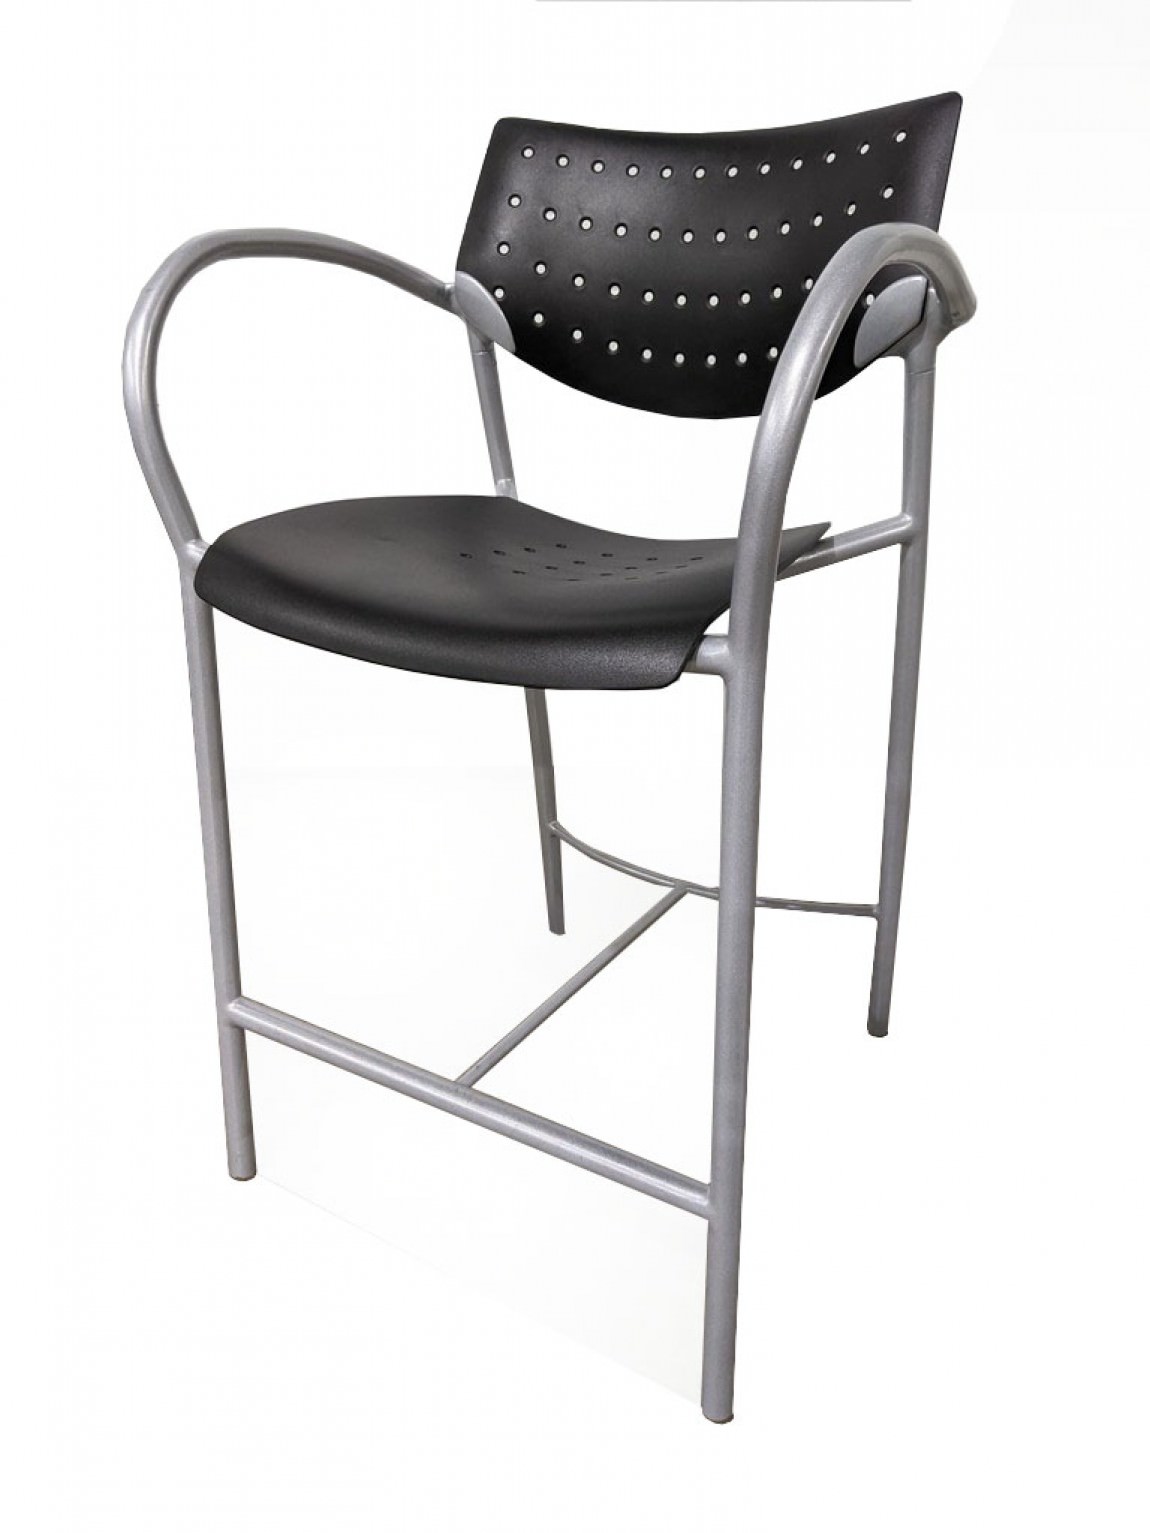 Black Café Height Chair - 39 inch High